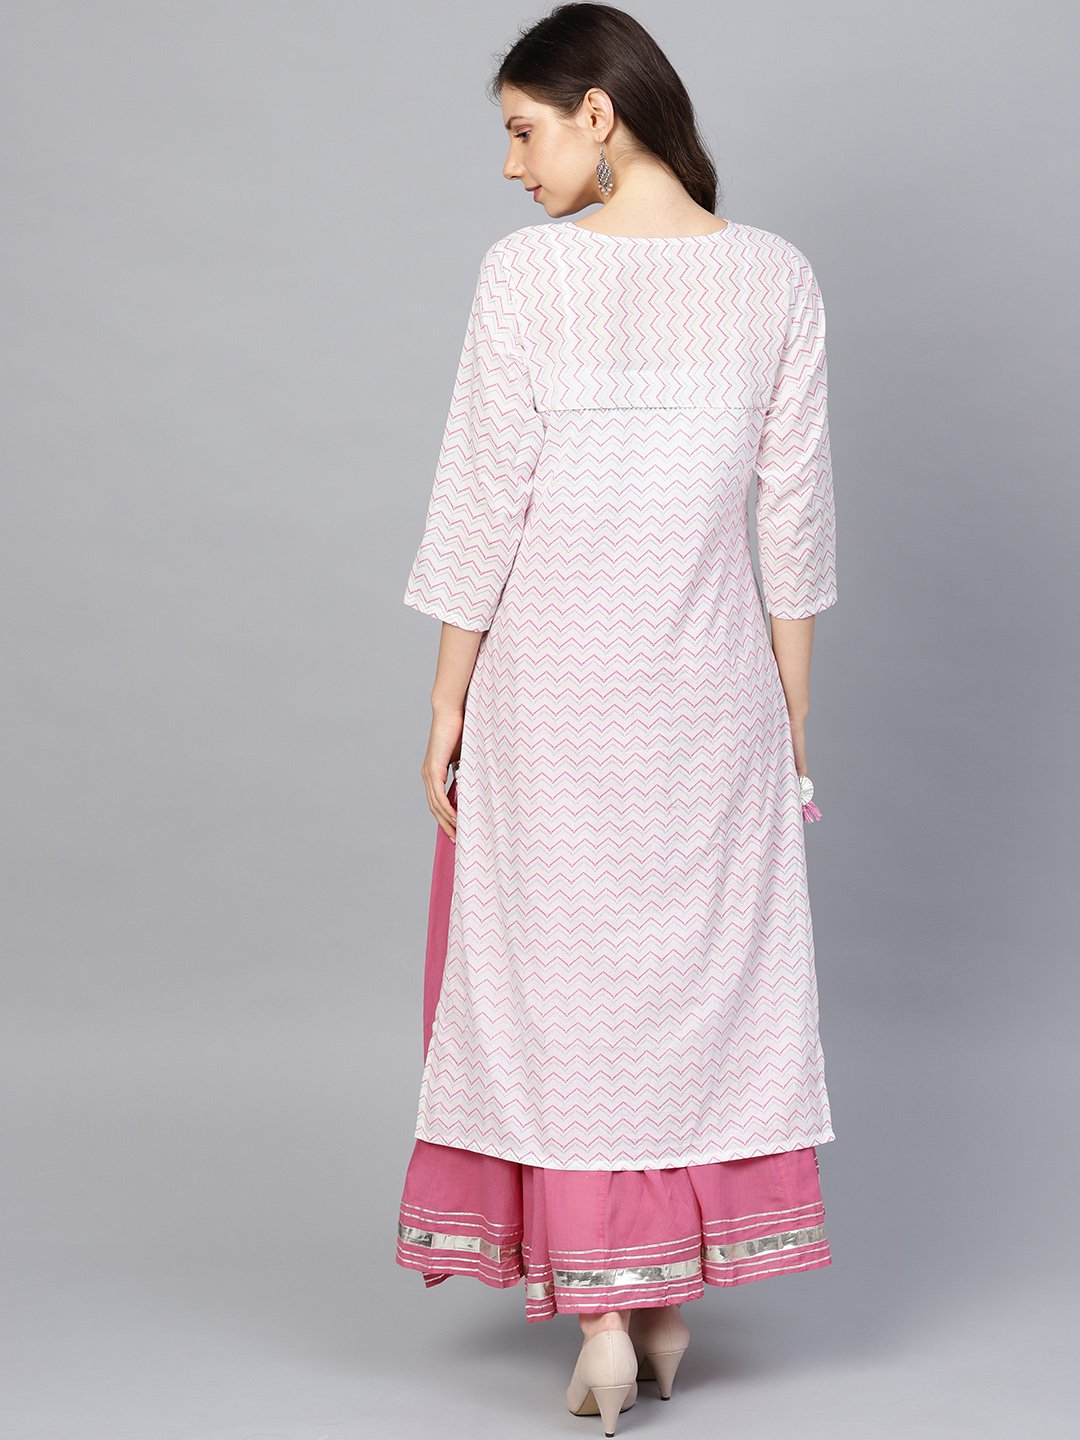 Ishin Women's Cotton White & Pink Printed With Gotta Patti A-Line Kurta Sharara Set